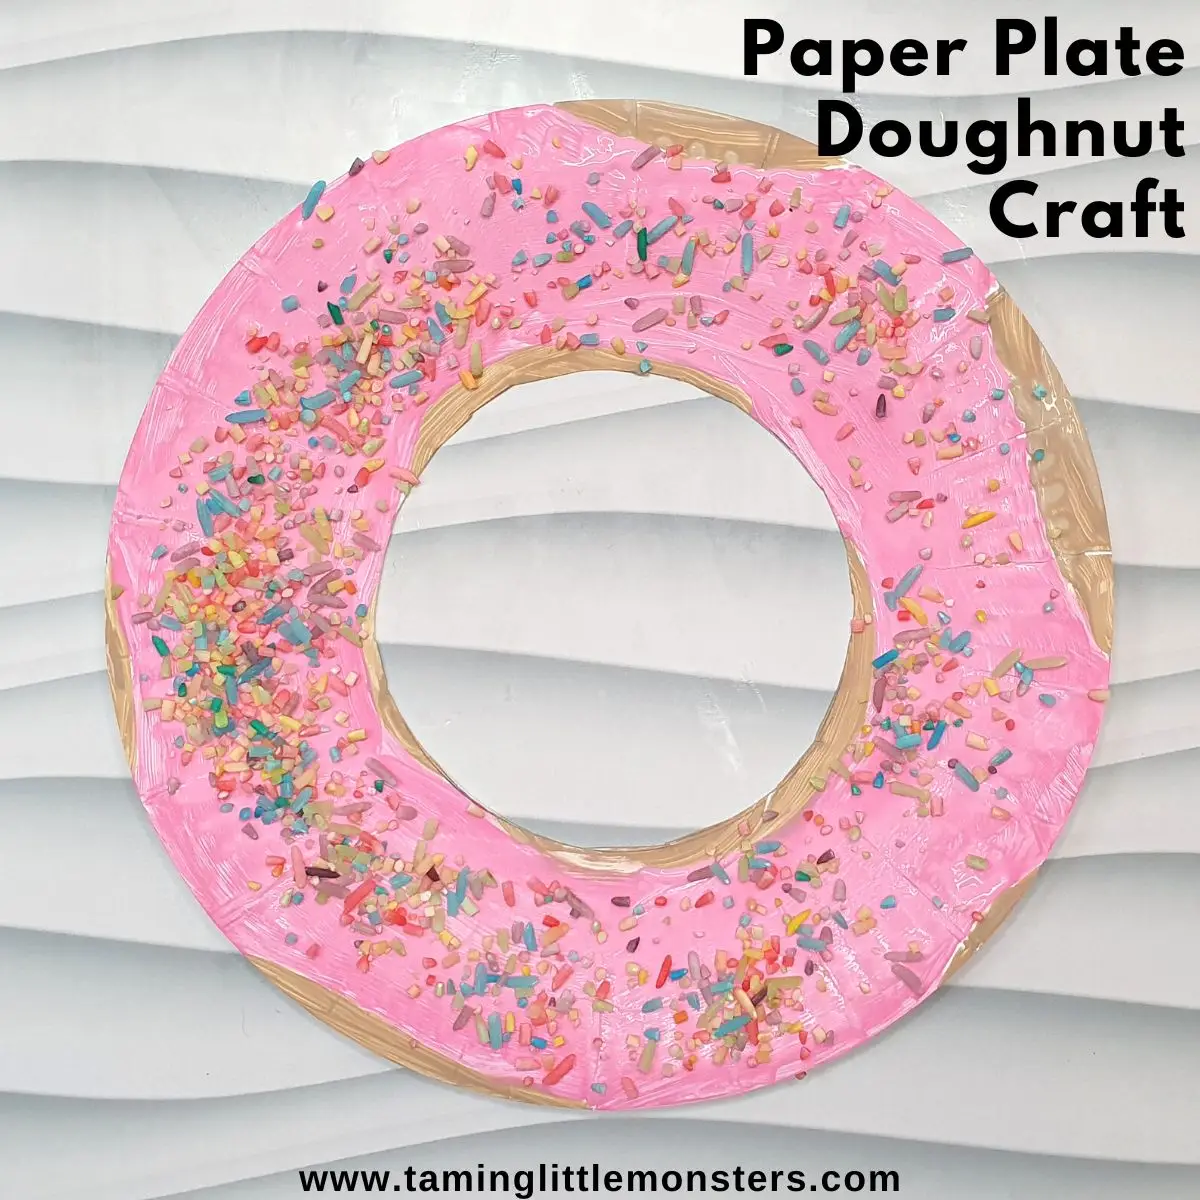 Easy Paper Plate Doughnut Craft for Kids - Taming Little Monsters